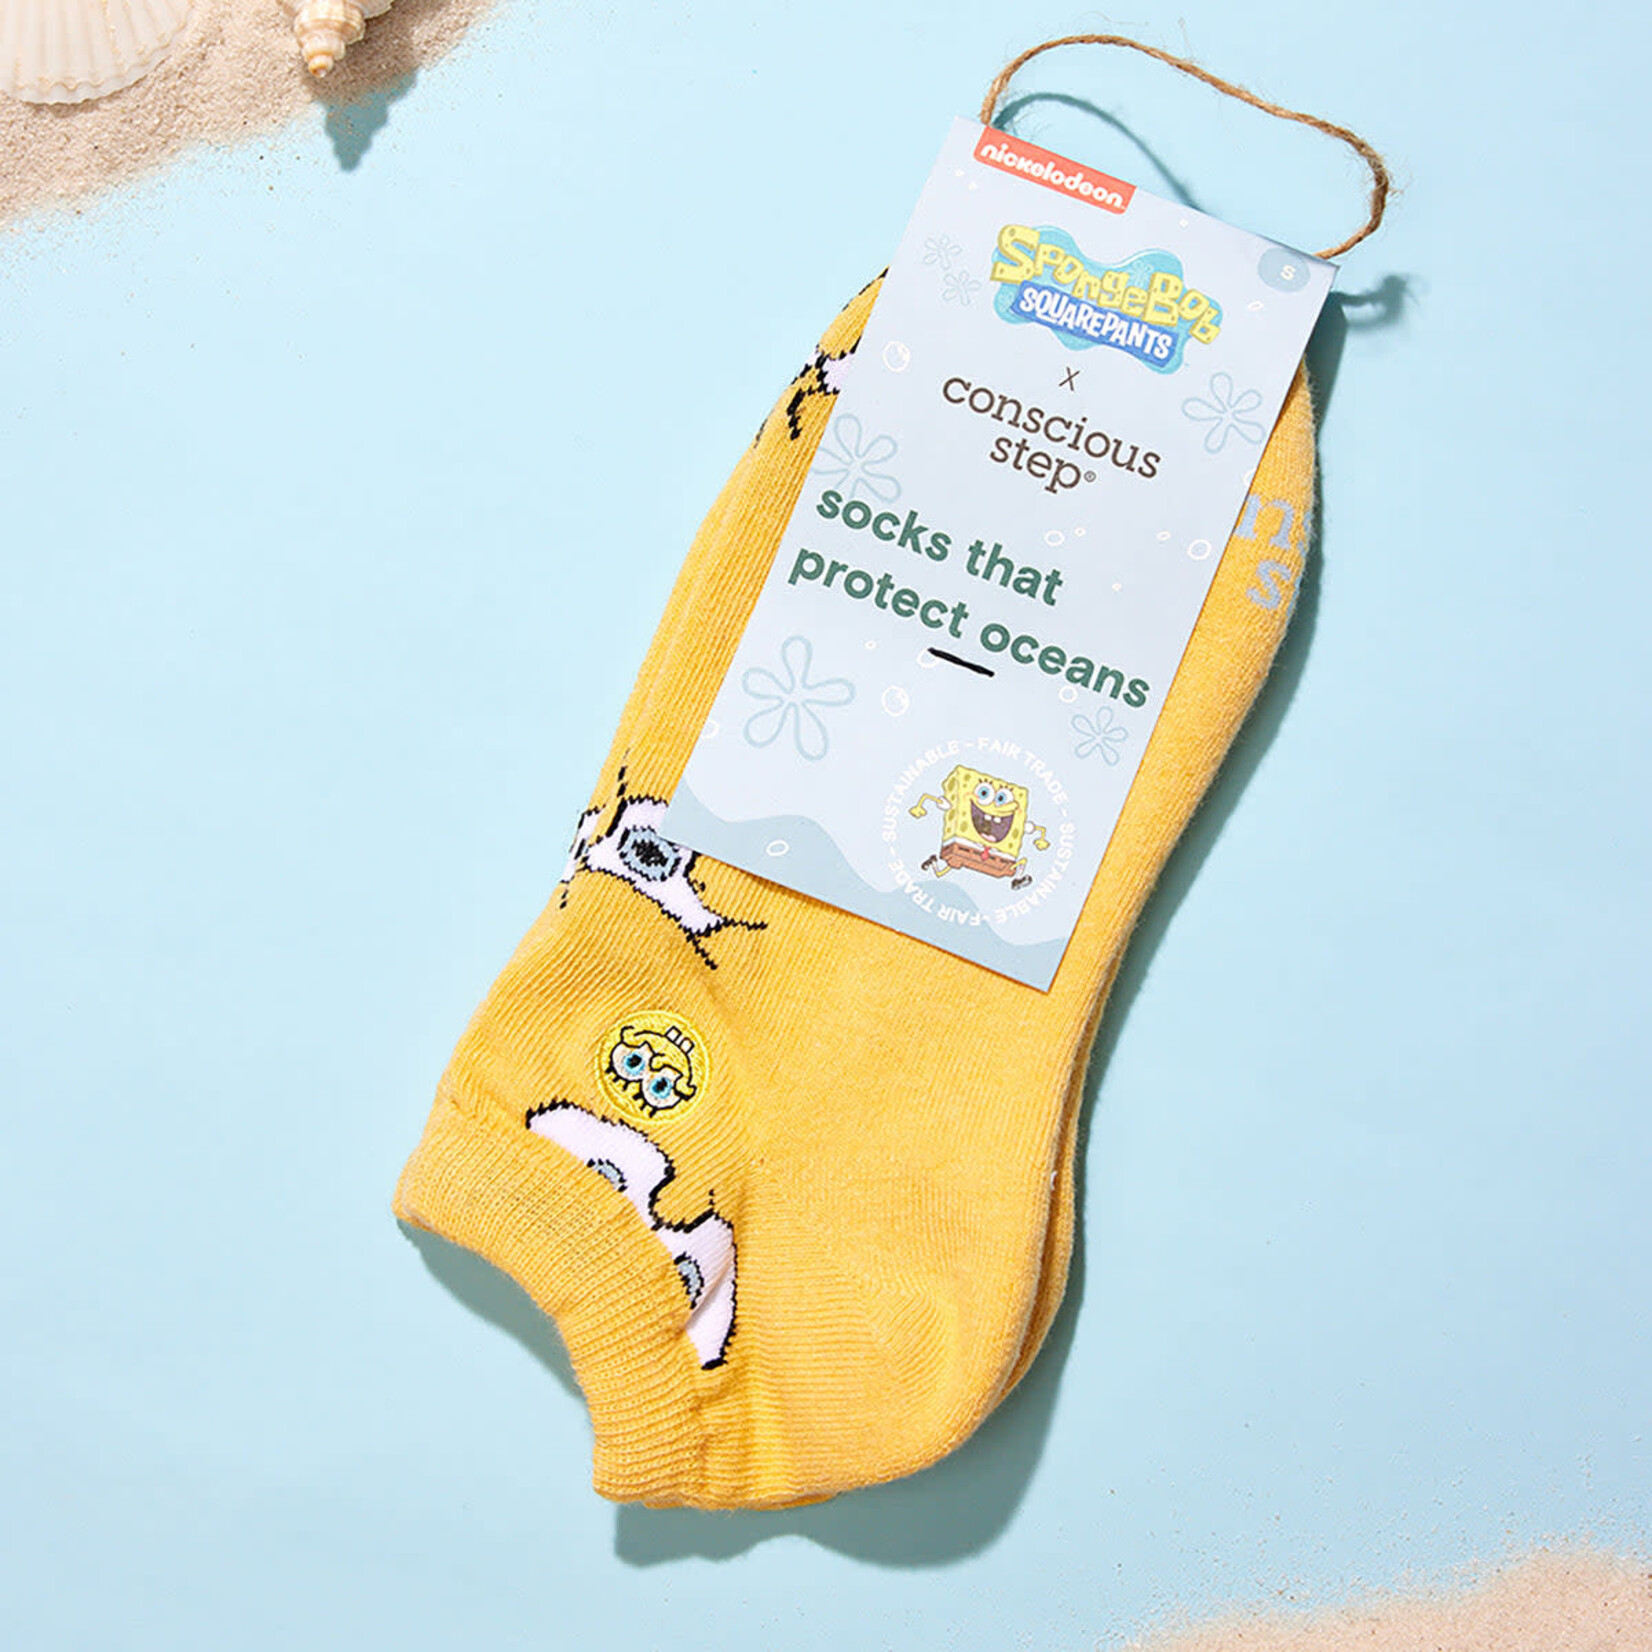 Conscious Step Conscious Step Socks Spongebob Socks that Protect Oceans, Yellow, Small